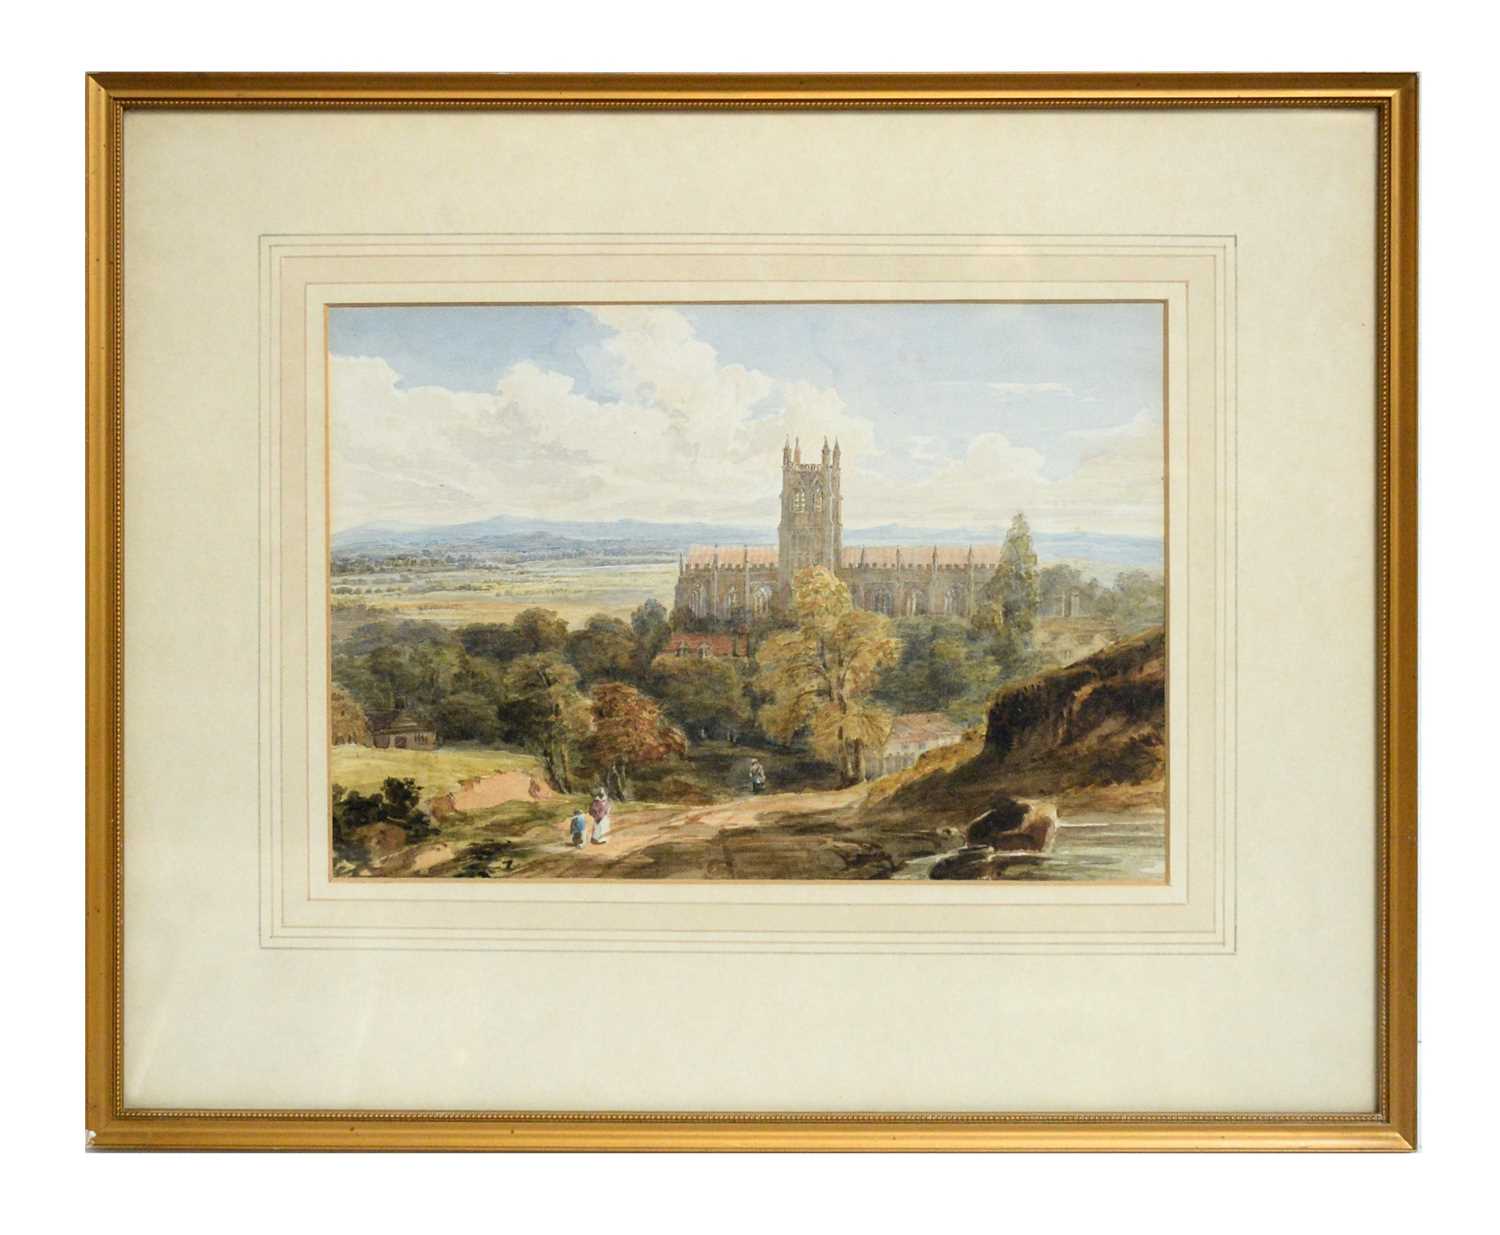 Lot 756 - 19th Century British School - Great Malvern Priory | watercolour